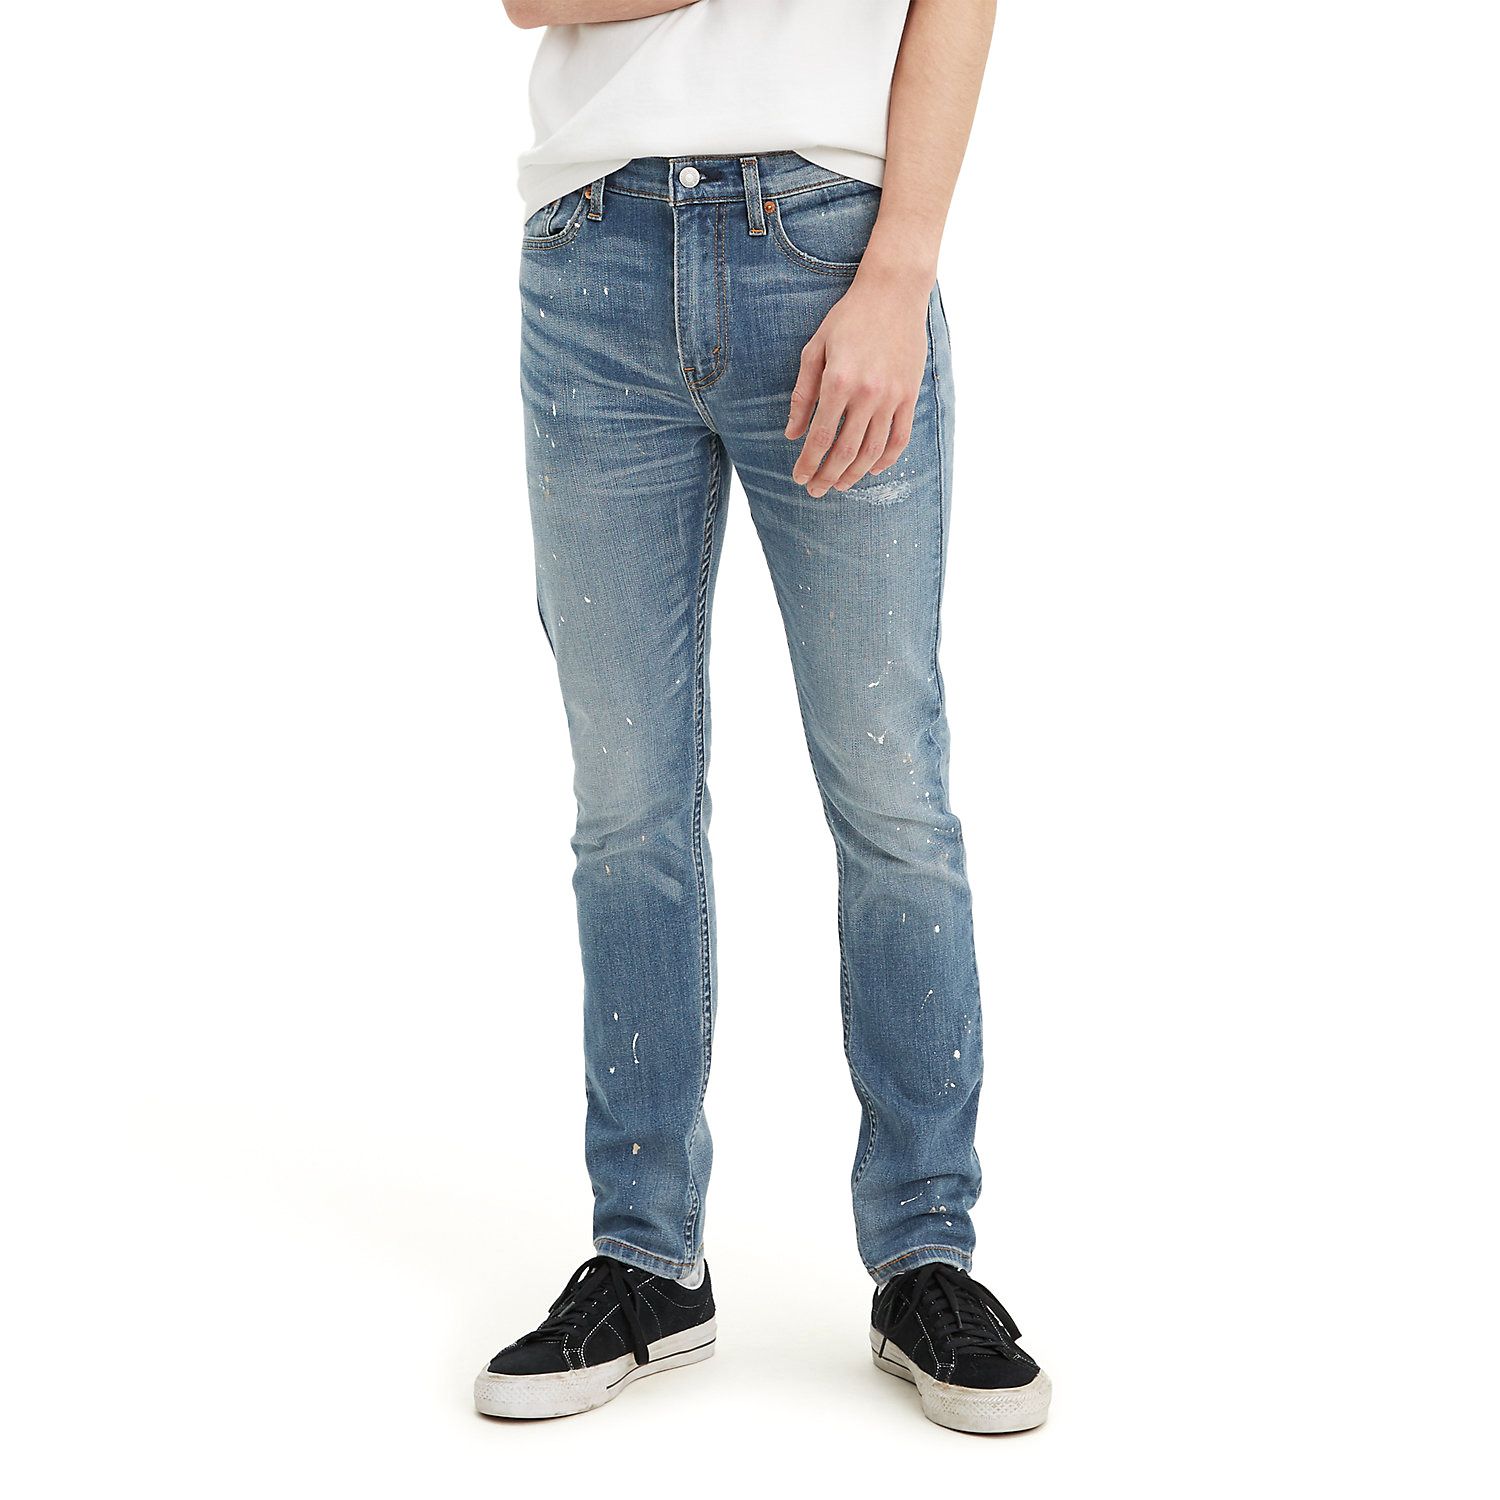 levis 510 skinny jeans